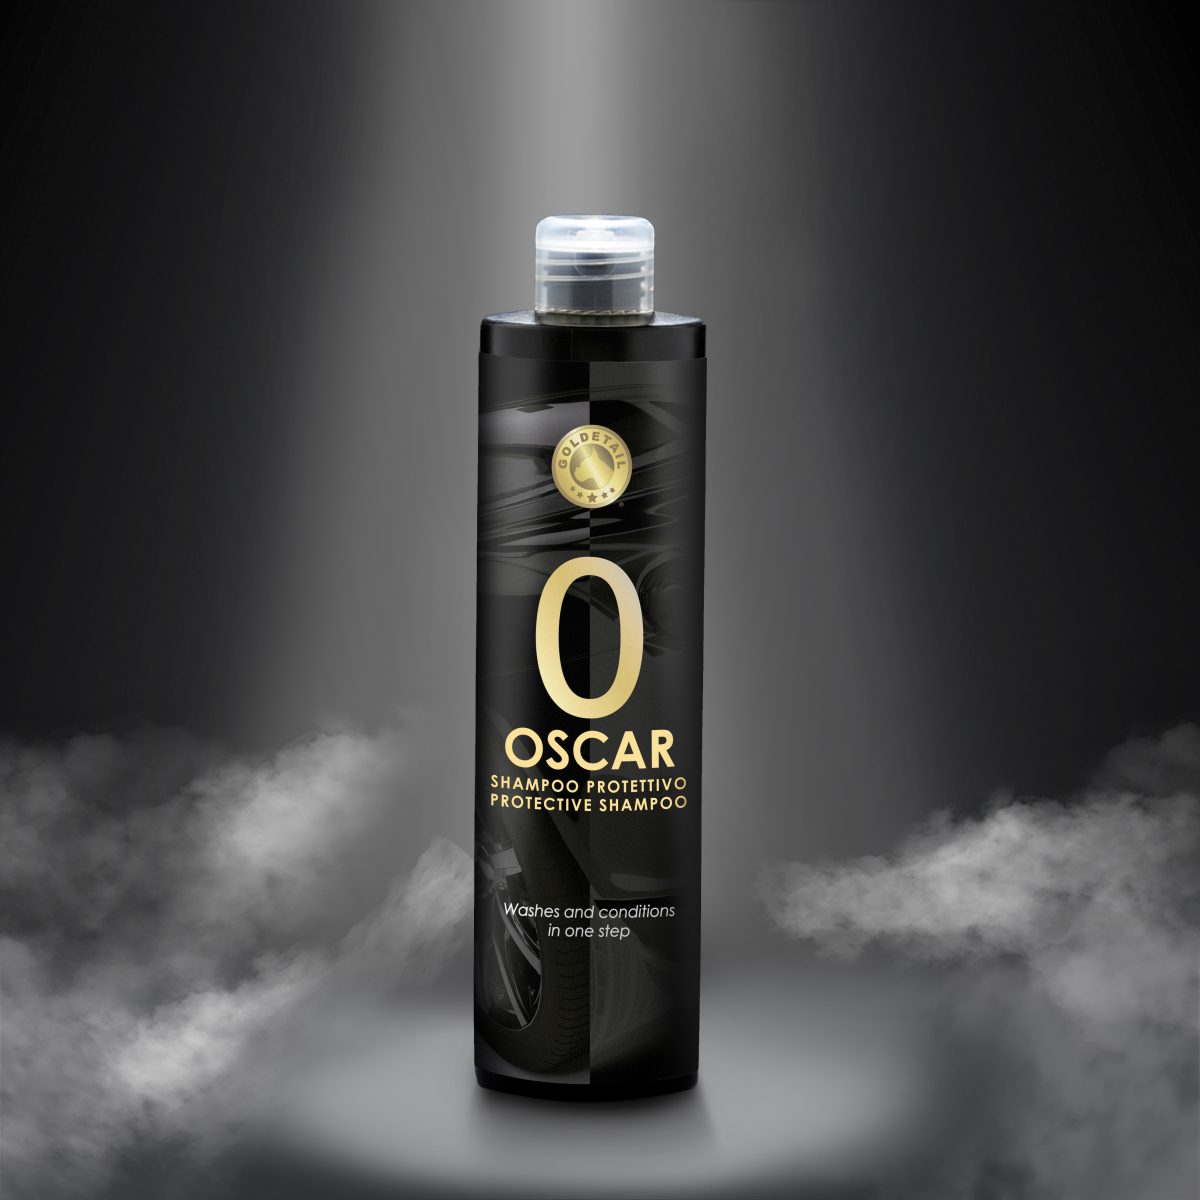 Bottle of Oscar Protective shampoo